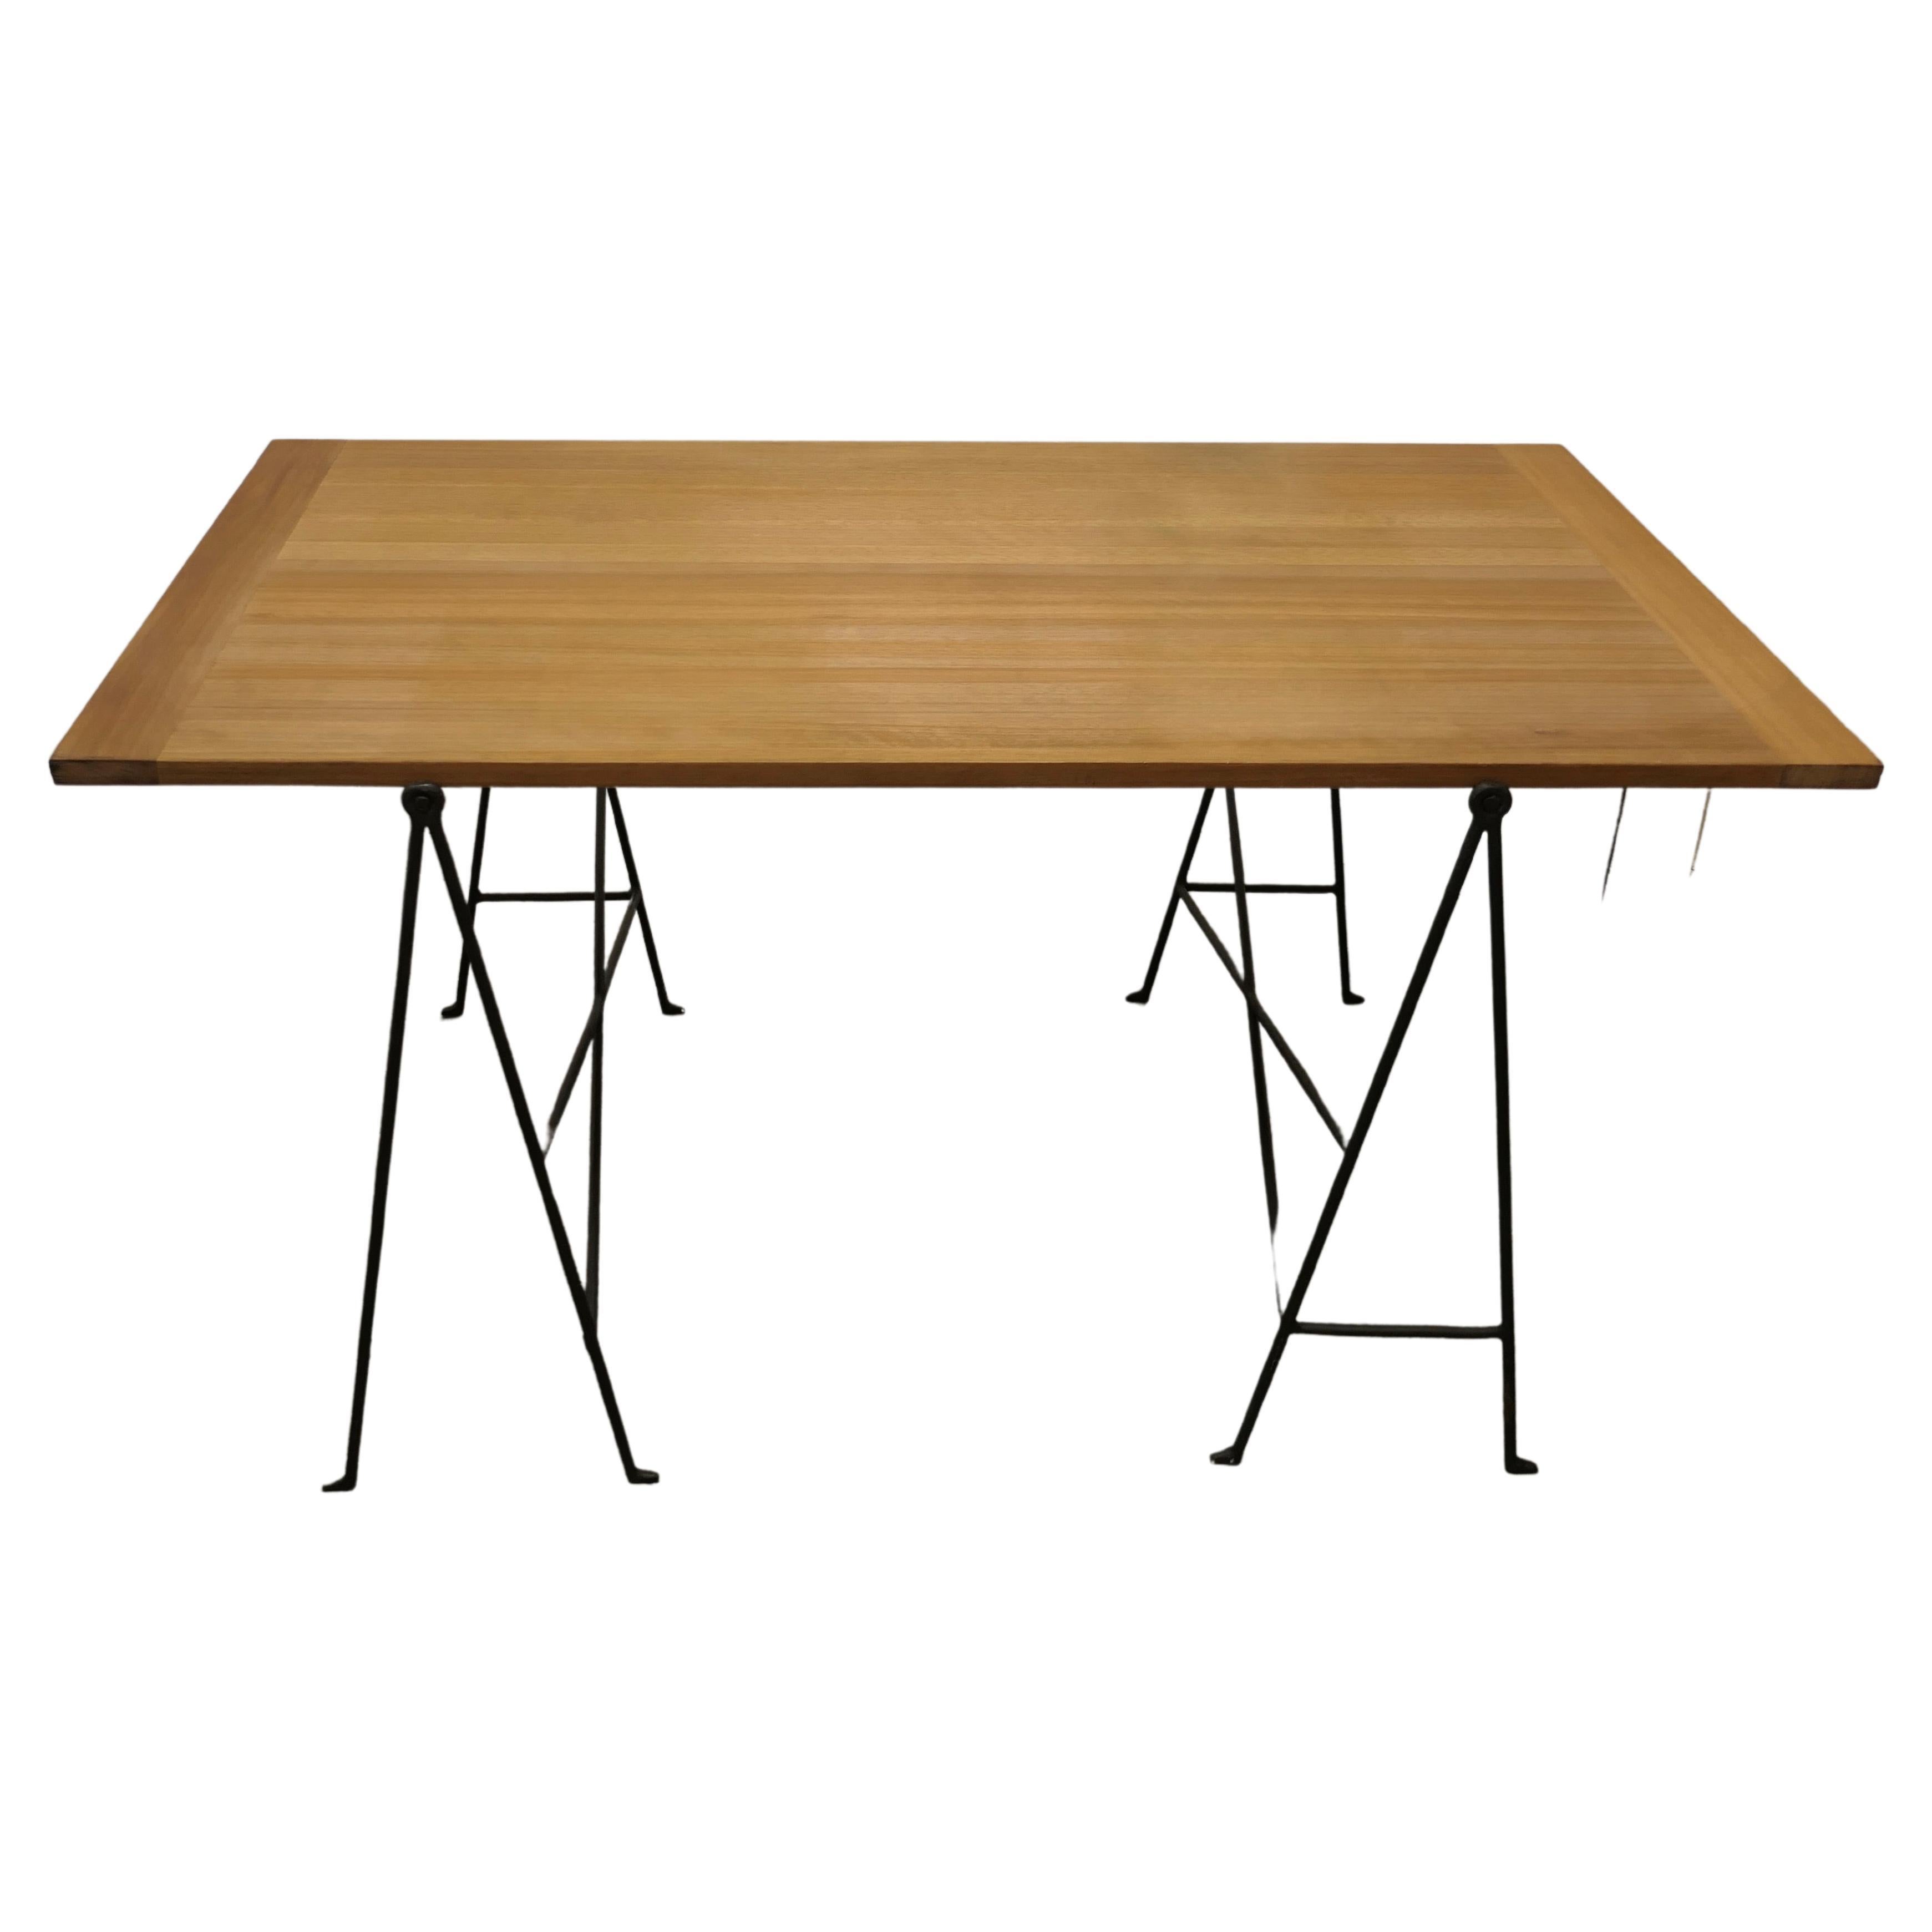 1950s, Scandinavian Minimalist Sawhorse Desk or Table 